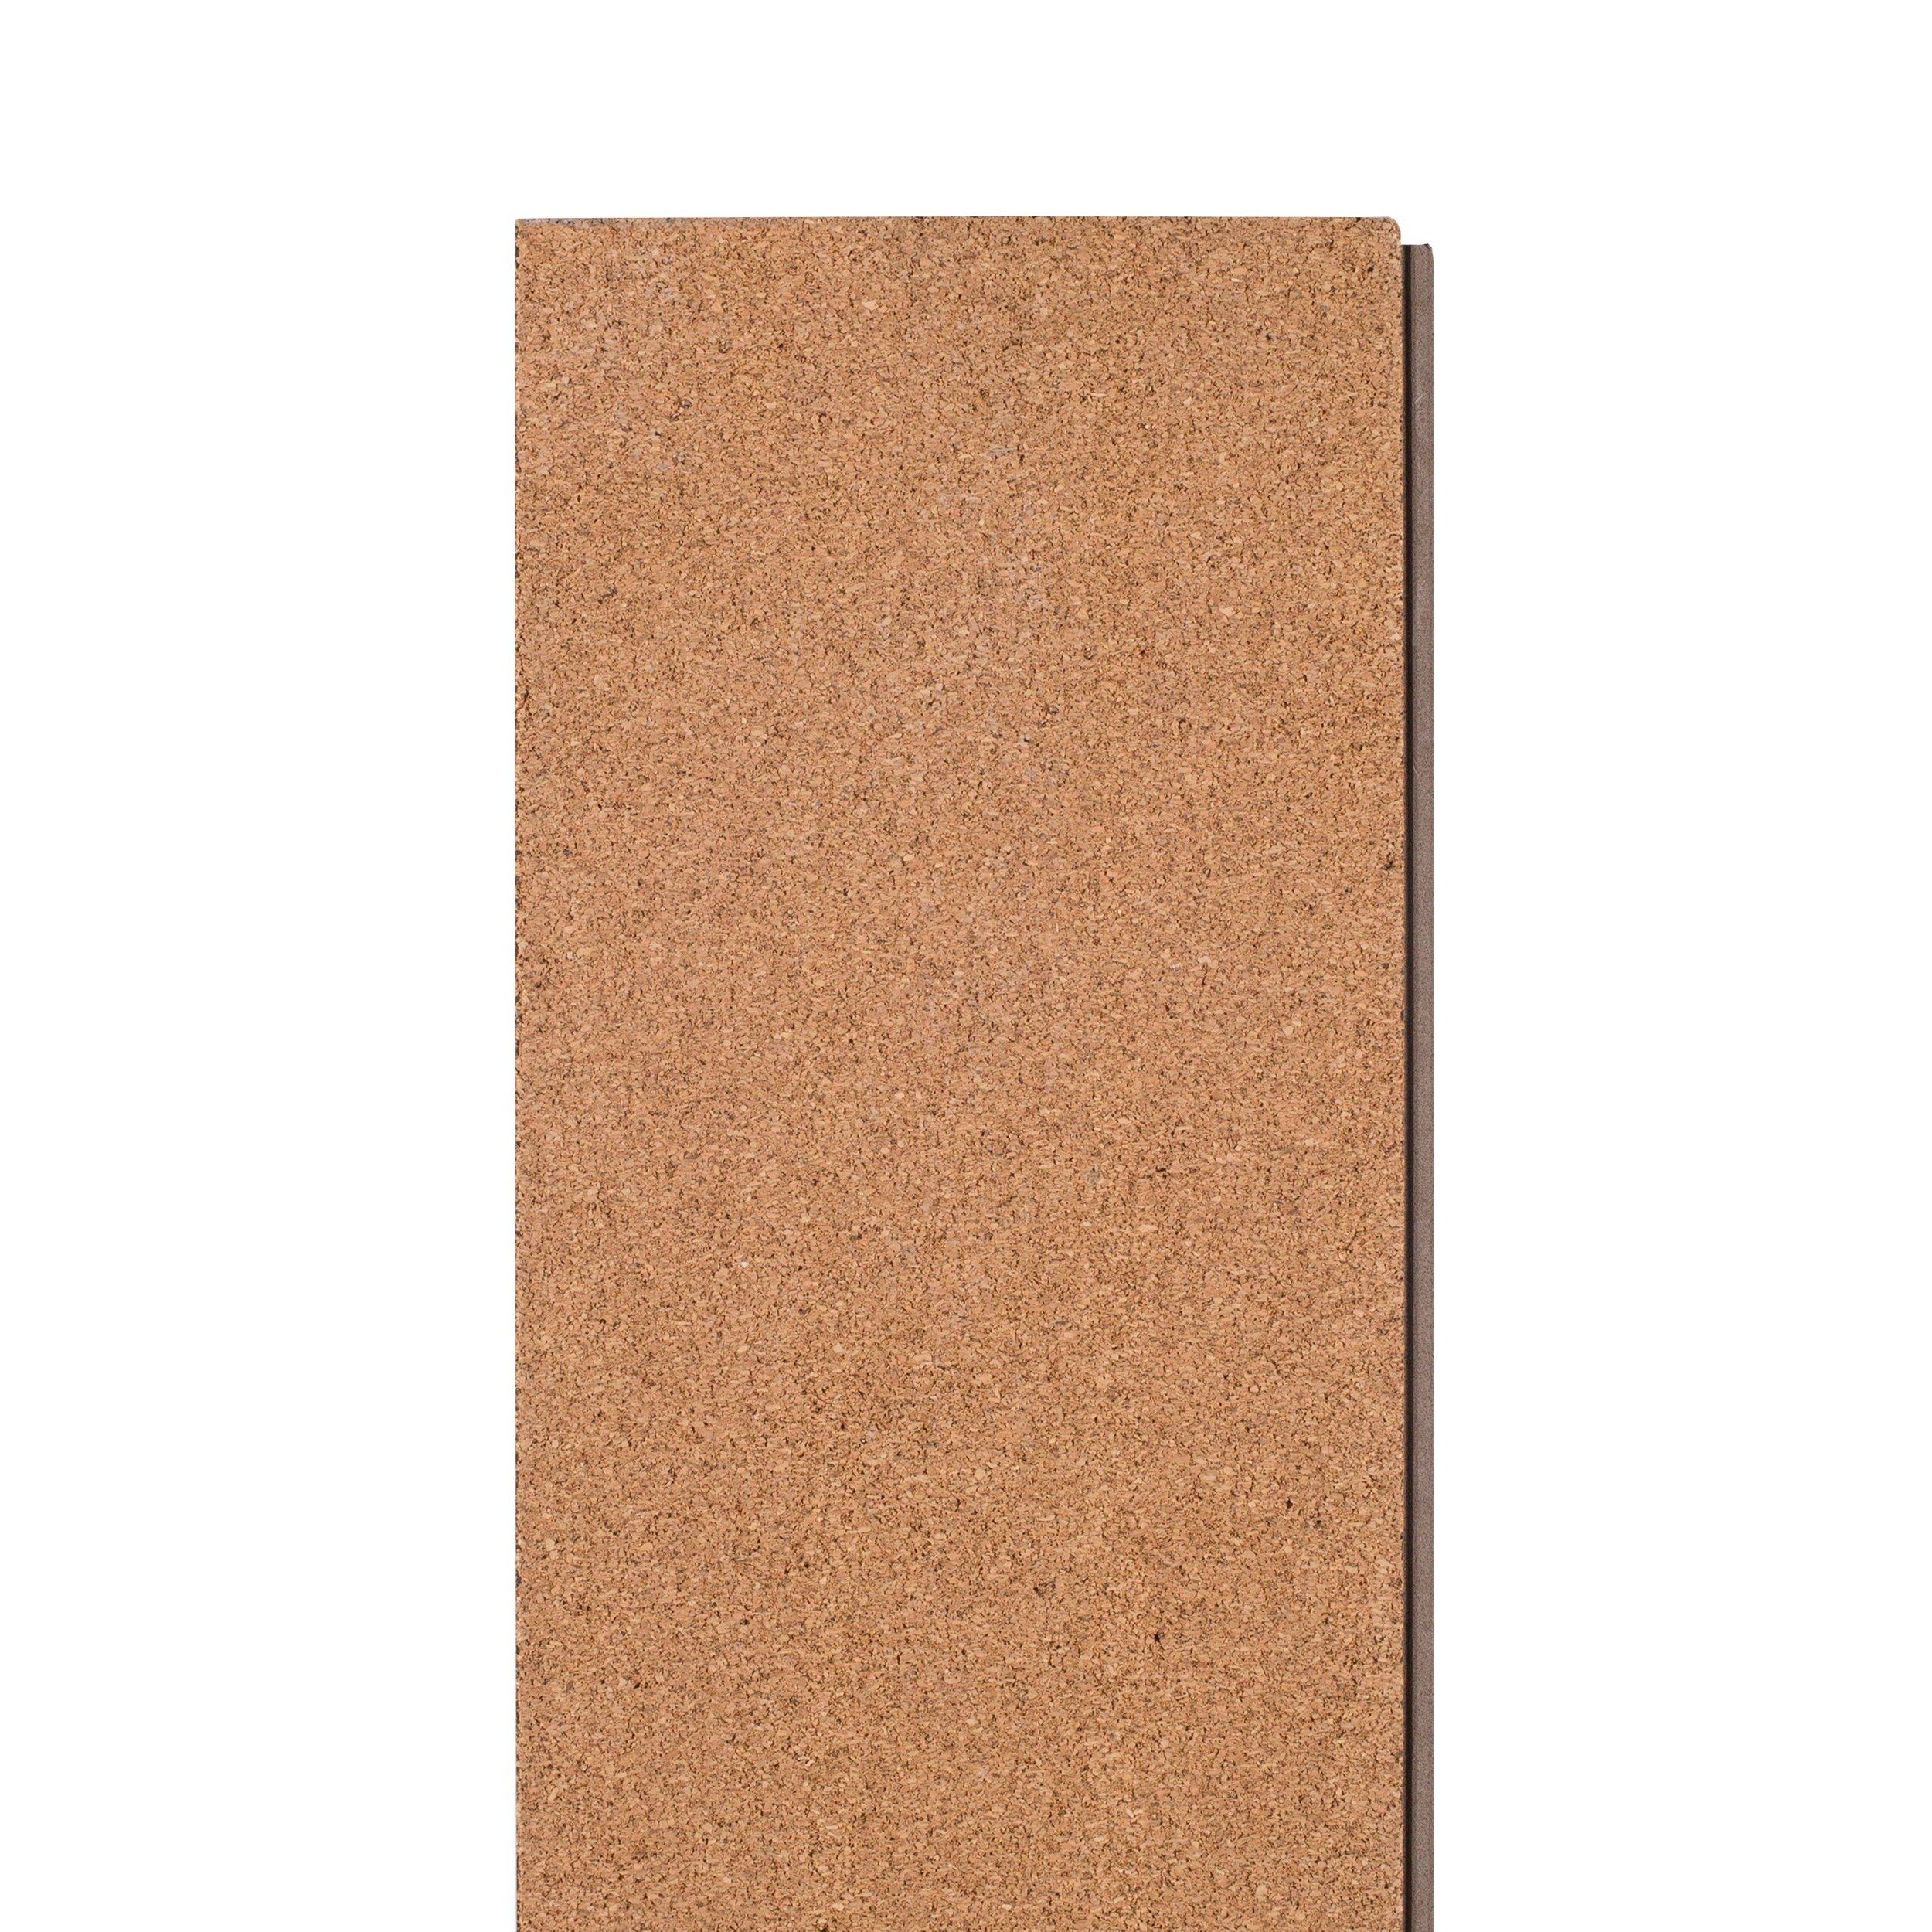 Sonoma Glen Rigid Core Luxury Vinyl Plank - Cork Back